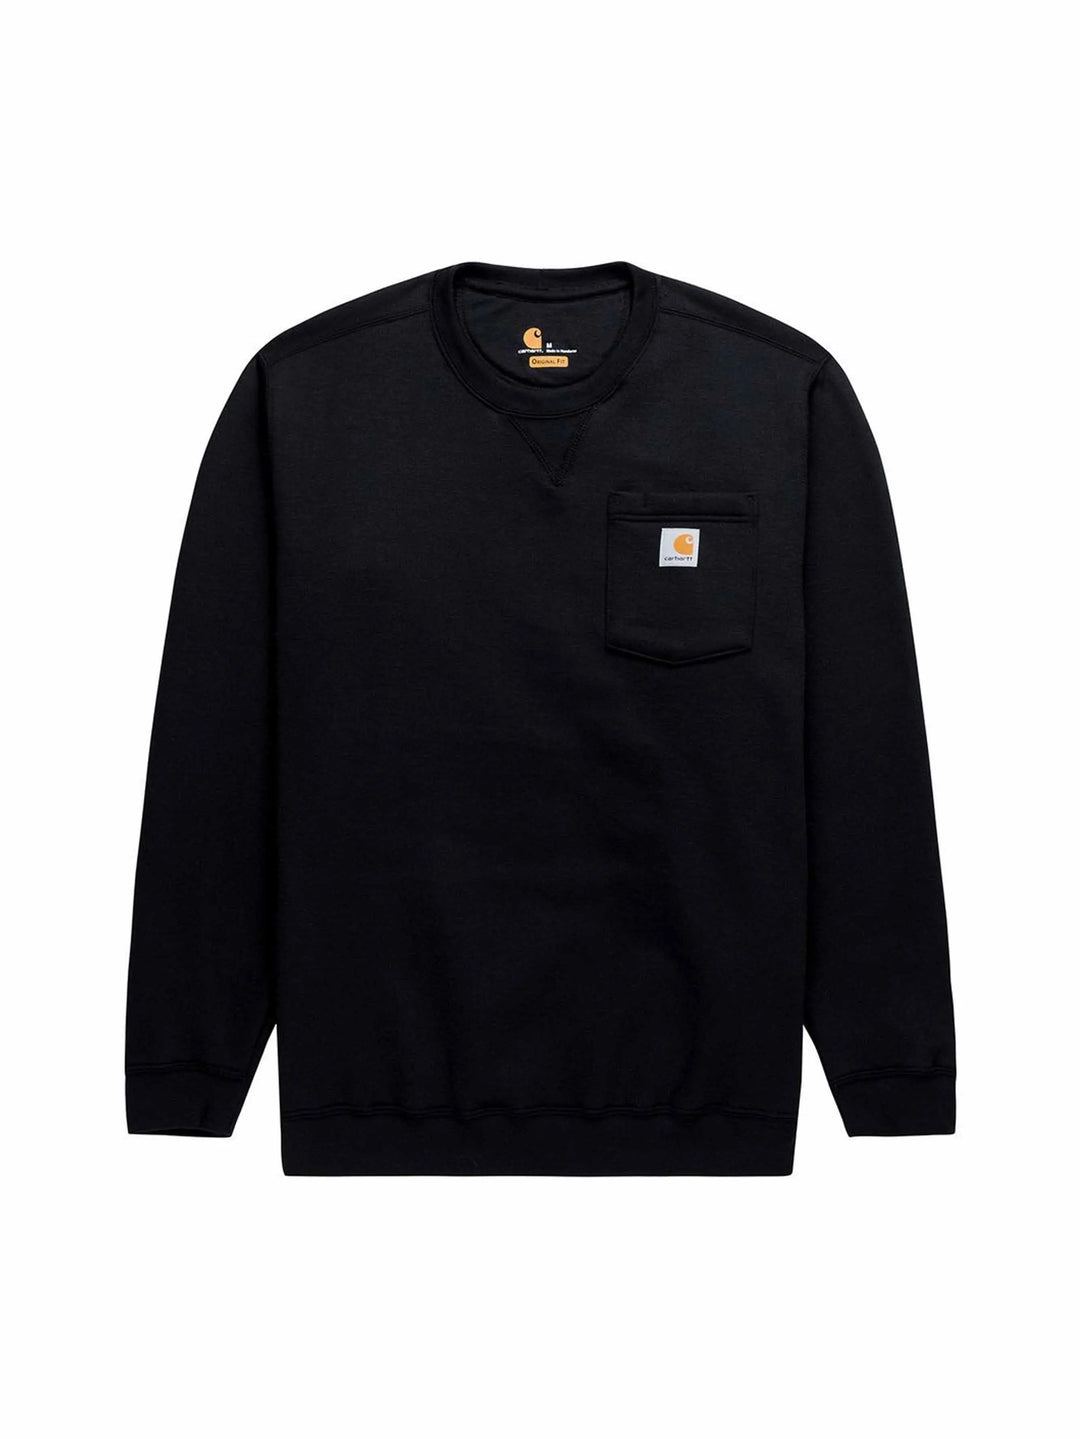 Carhartt Pocket Crewneck Sweatshirt Black in Auckland, New Zealand - Shop name